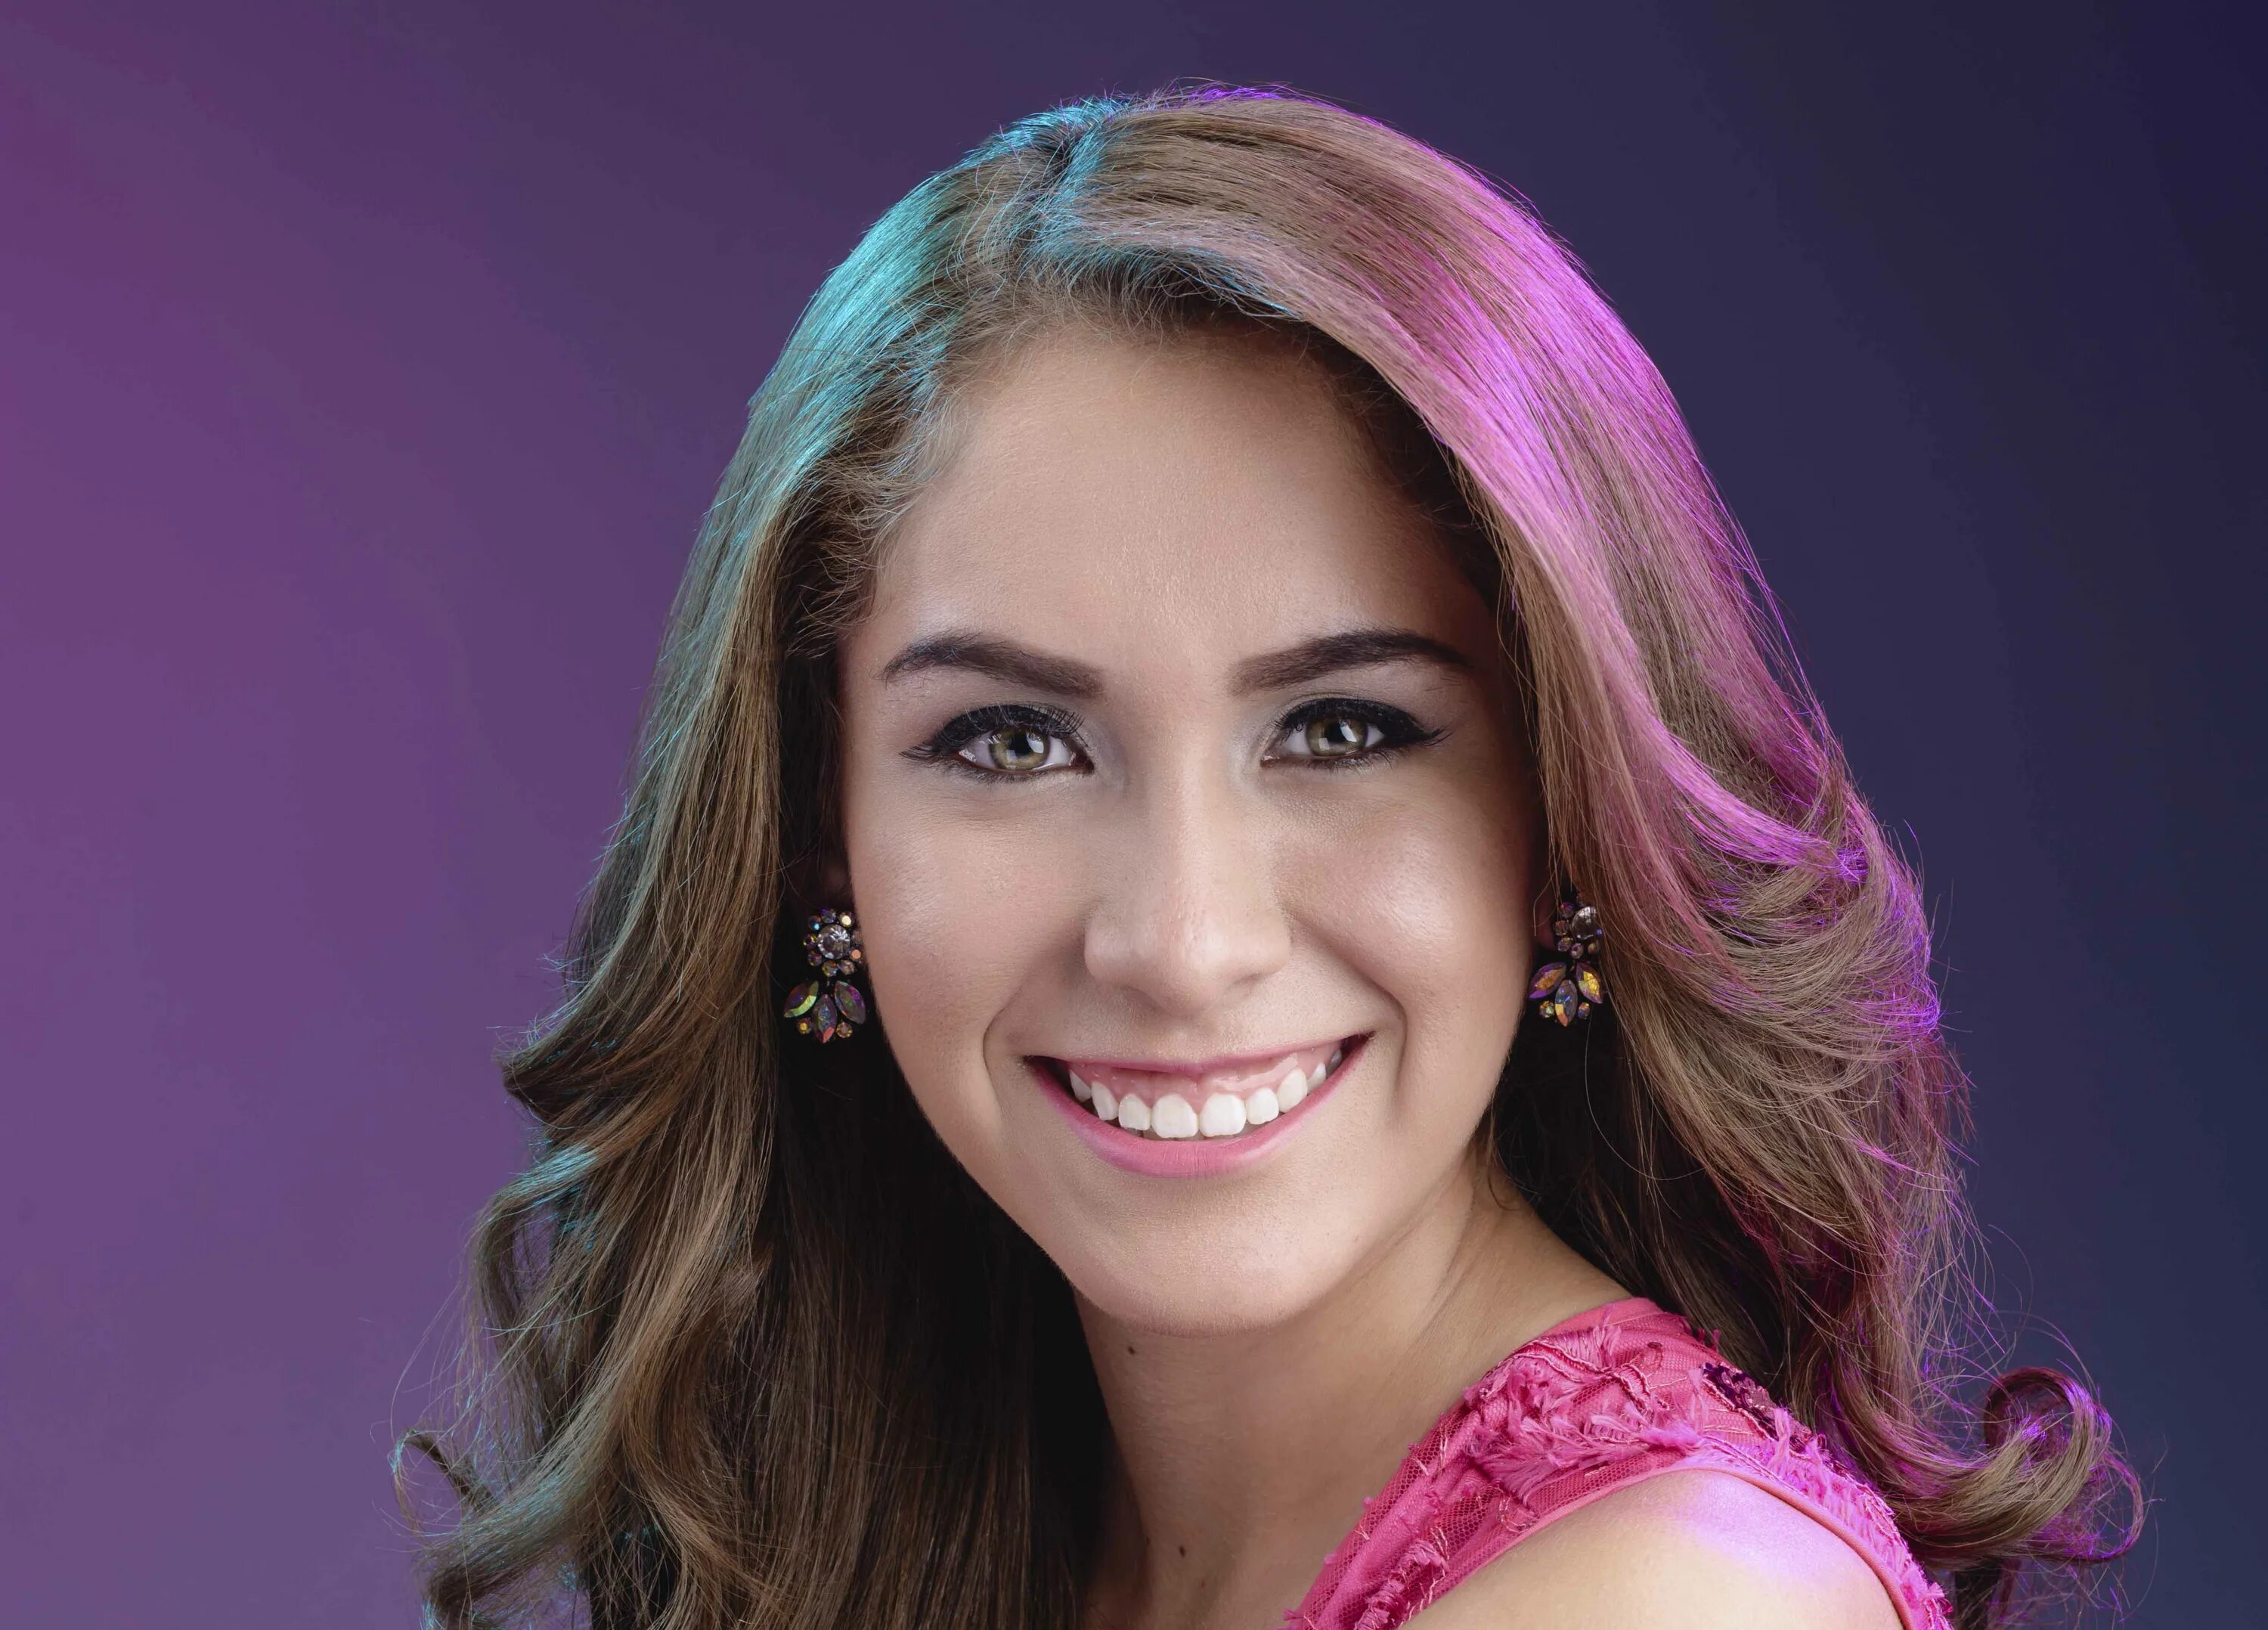 Maria alejandra. Алехандра Перез. Мисс подросток Никарагуа 2016.